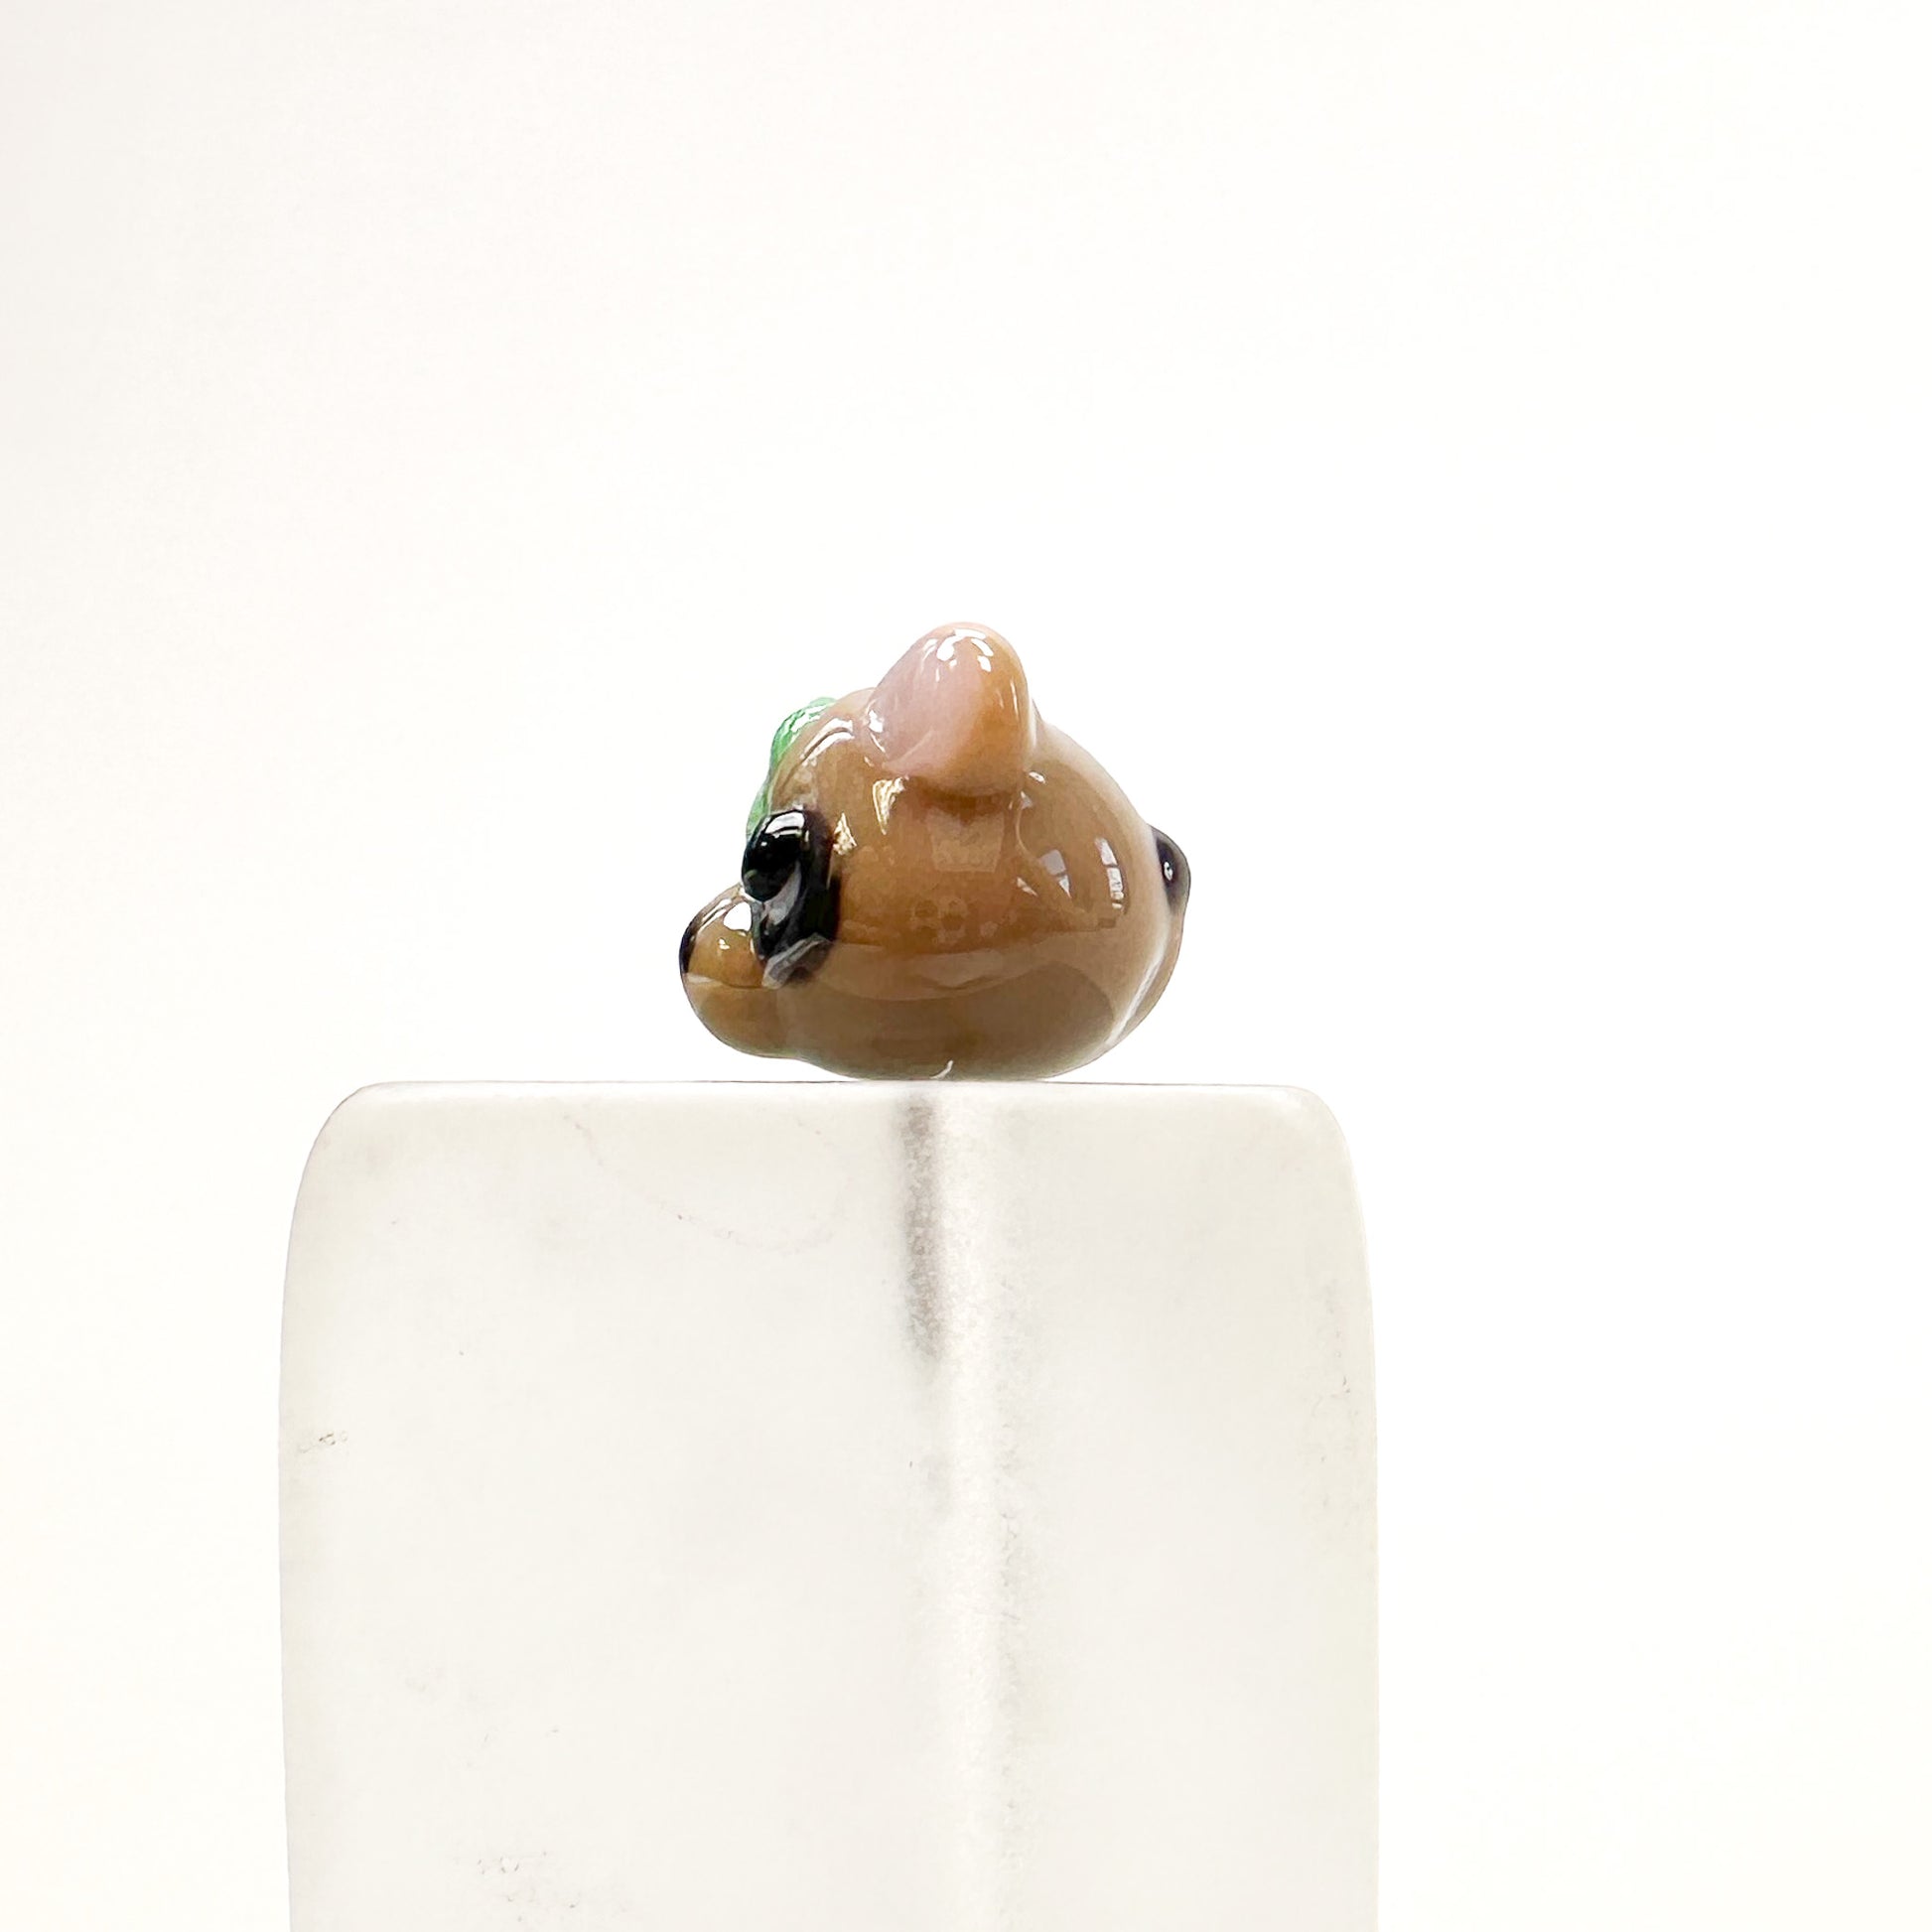 Chibi Handmade Glass Beads - Leaf Raccoon-The Bead Gallery Honolulu